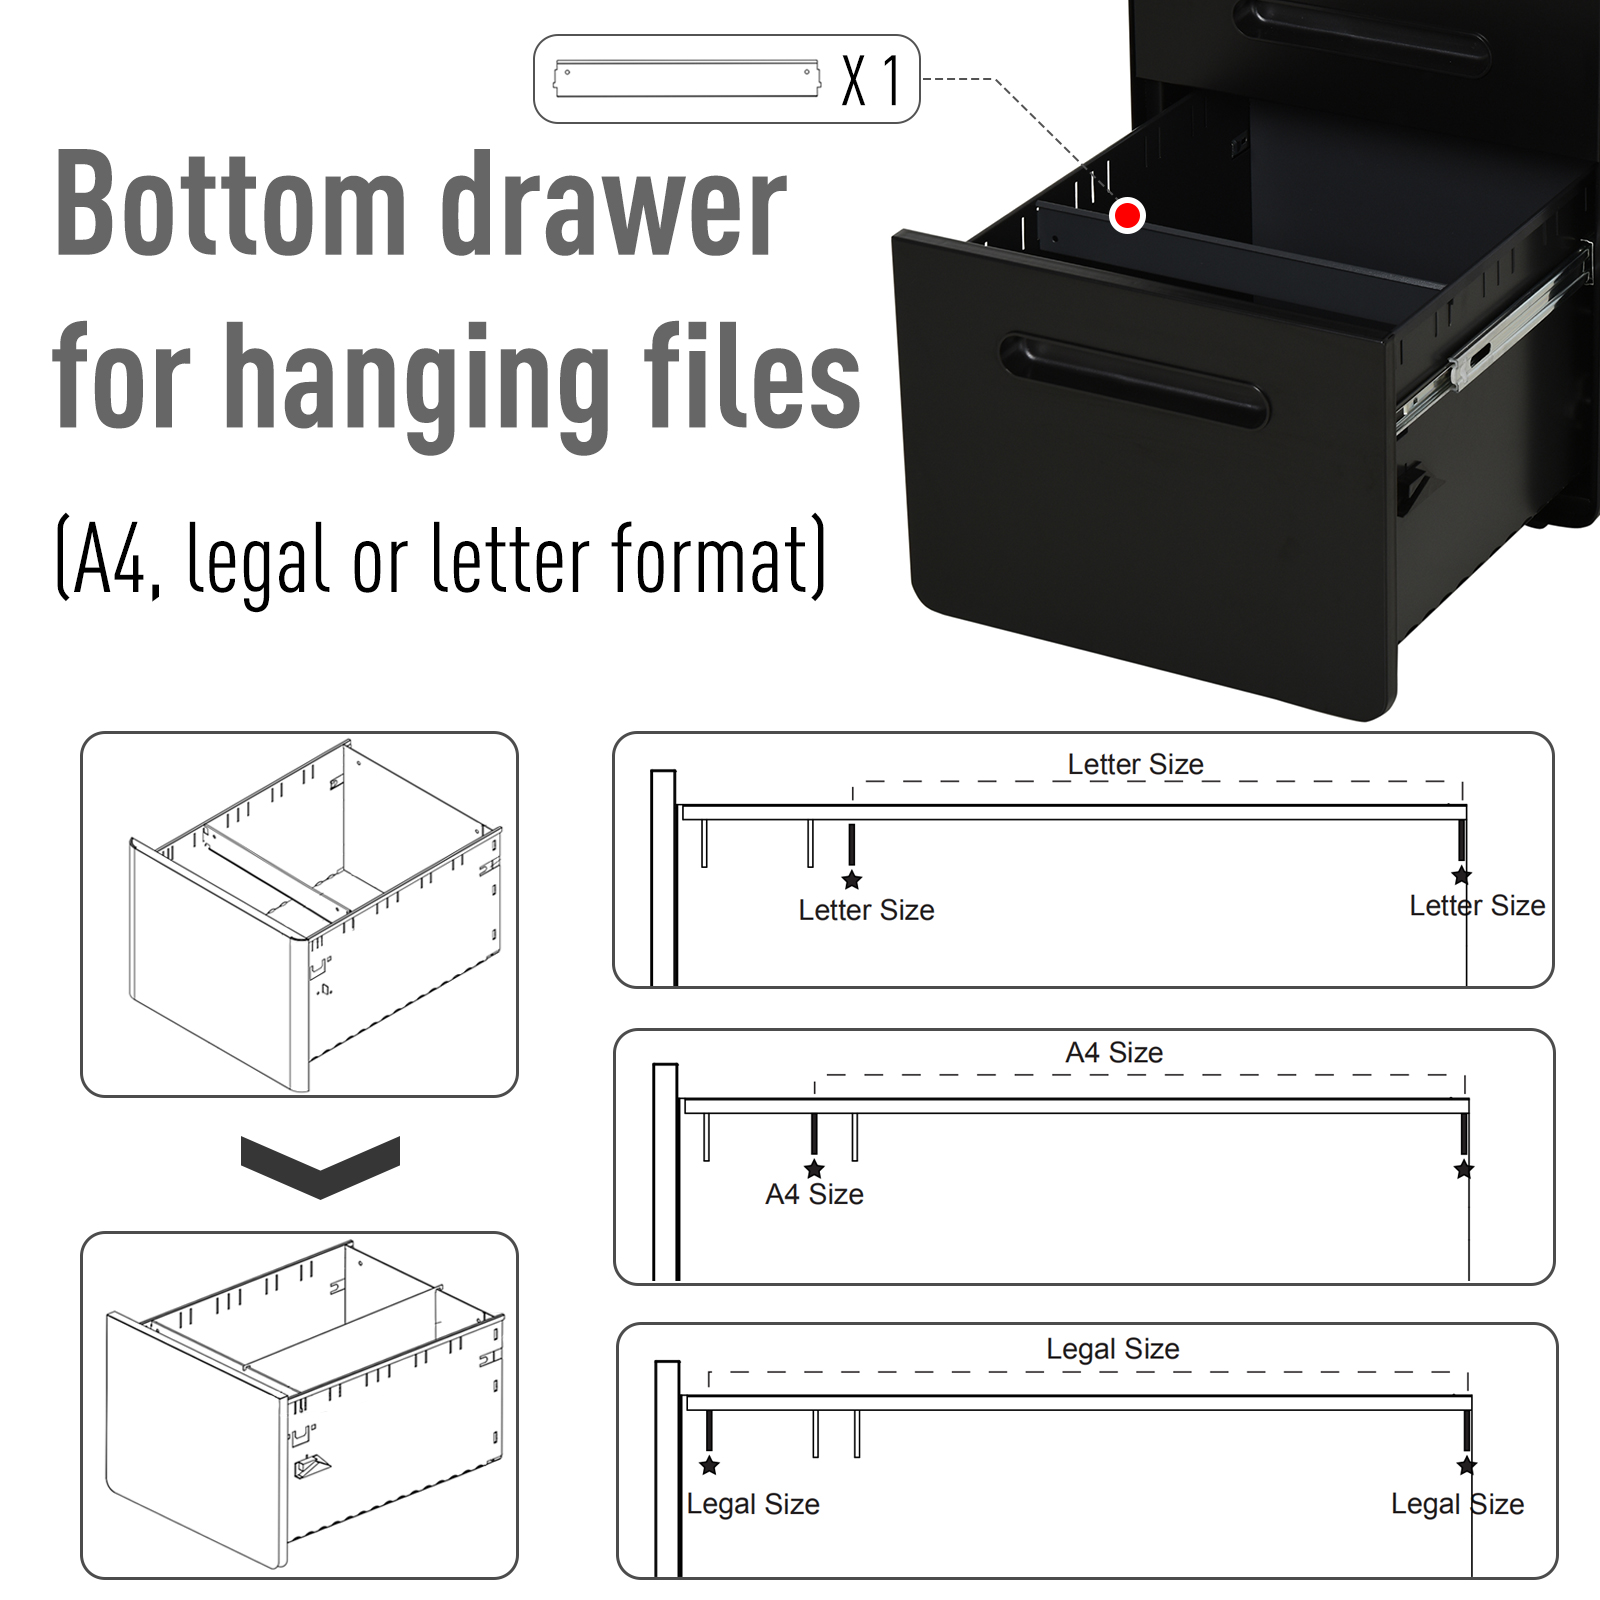 Vinsetto Fully Assembled 3-Drawer Mobile File Cabinet Lockable All-Metal Rolling Vertical File Cabinet Black